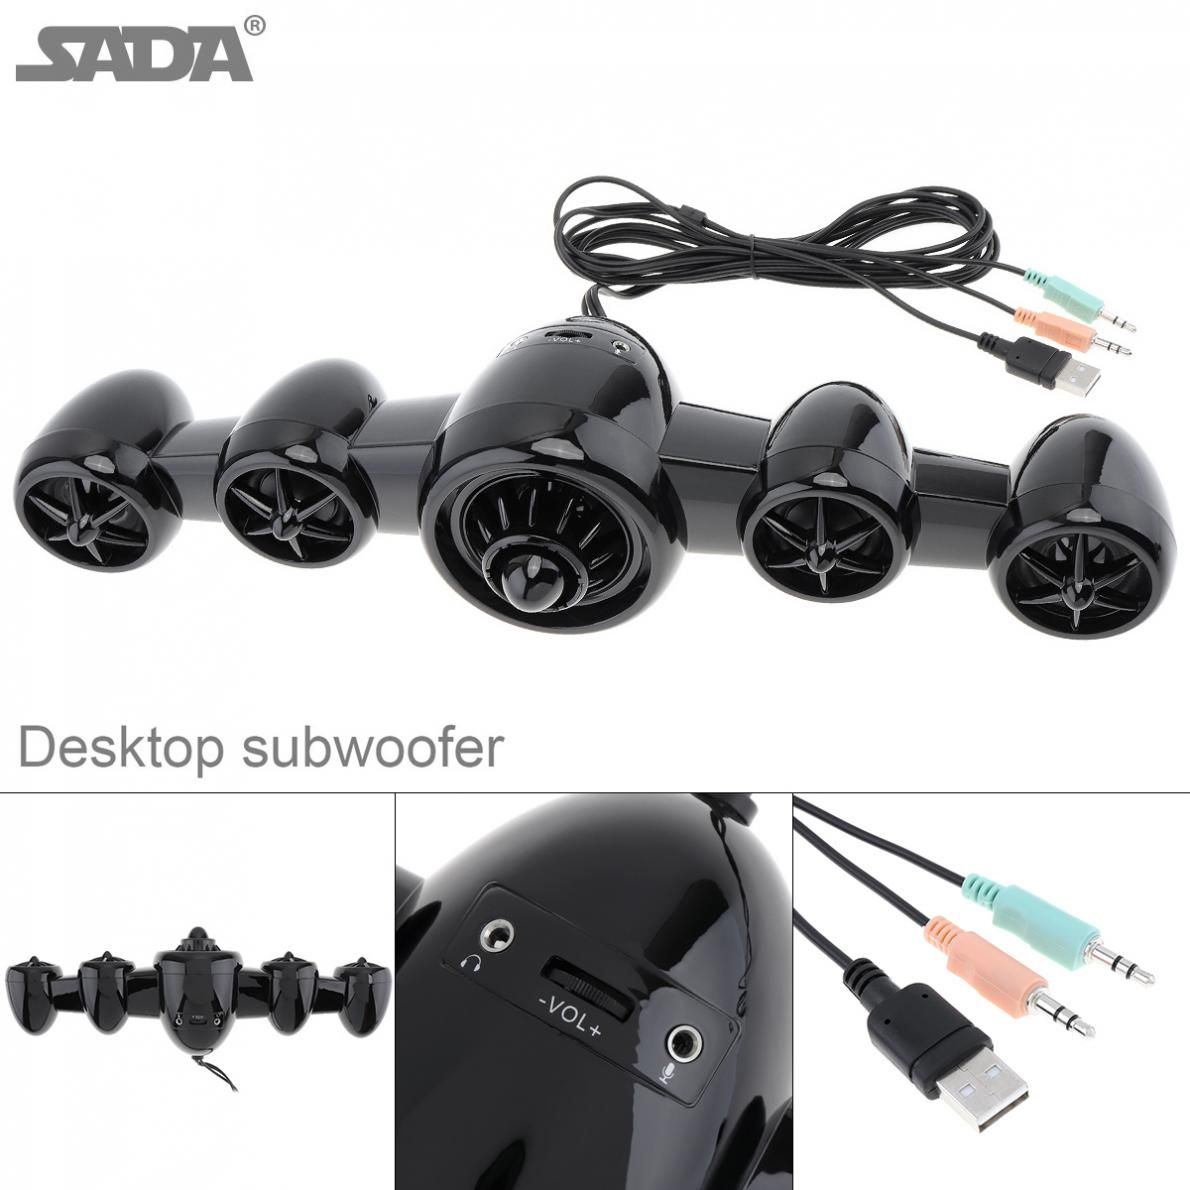 SADA-D-219-AUX-Multi-media-Bluetooth-Stereo-Surround-Sound-Mini-Aircraft-Computer-Speaker-with-3-Spe-1627139